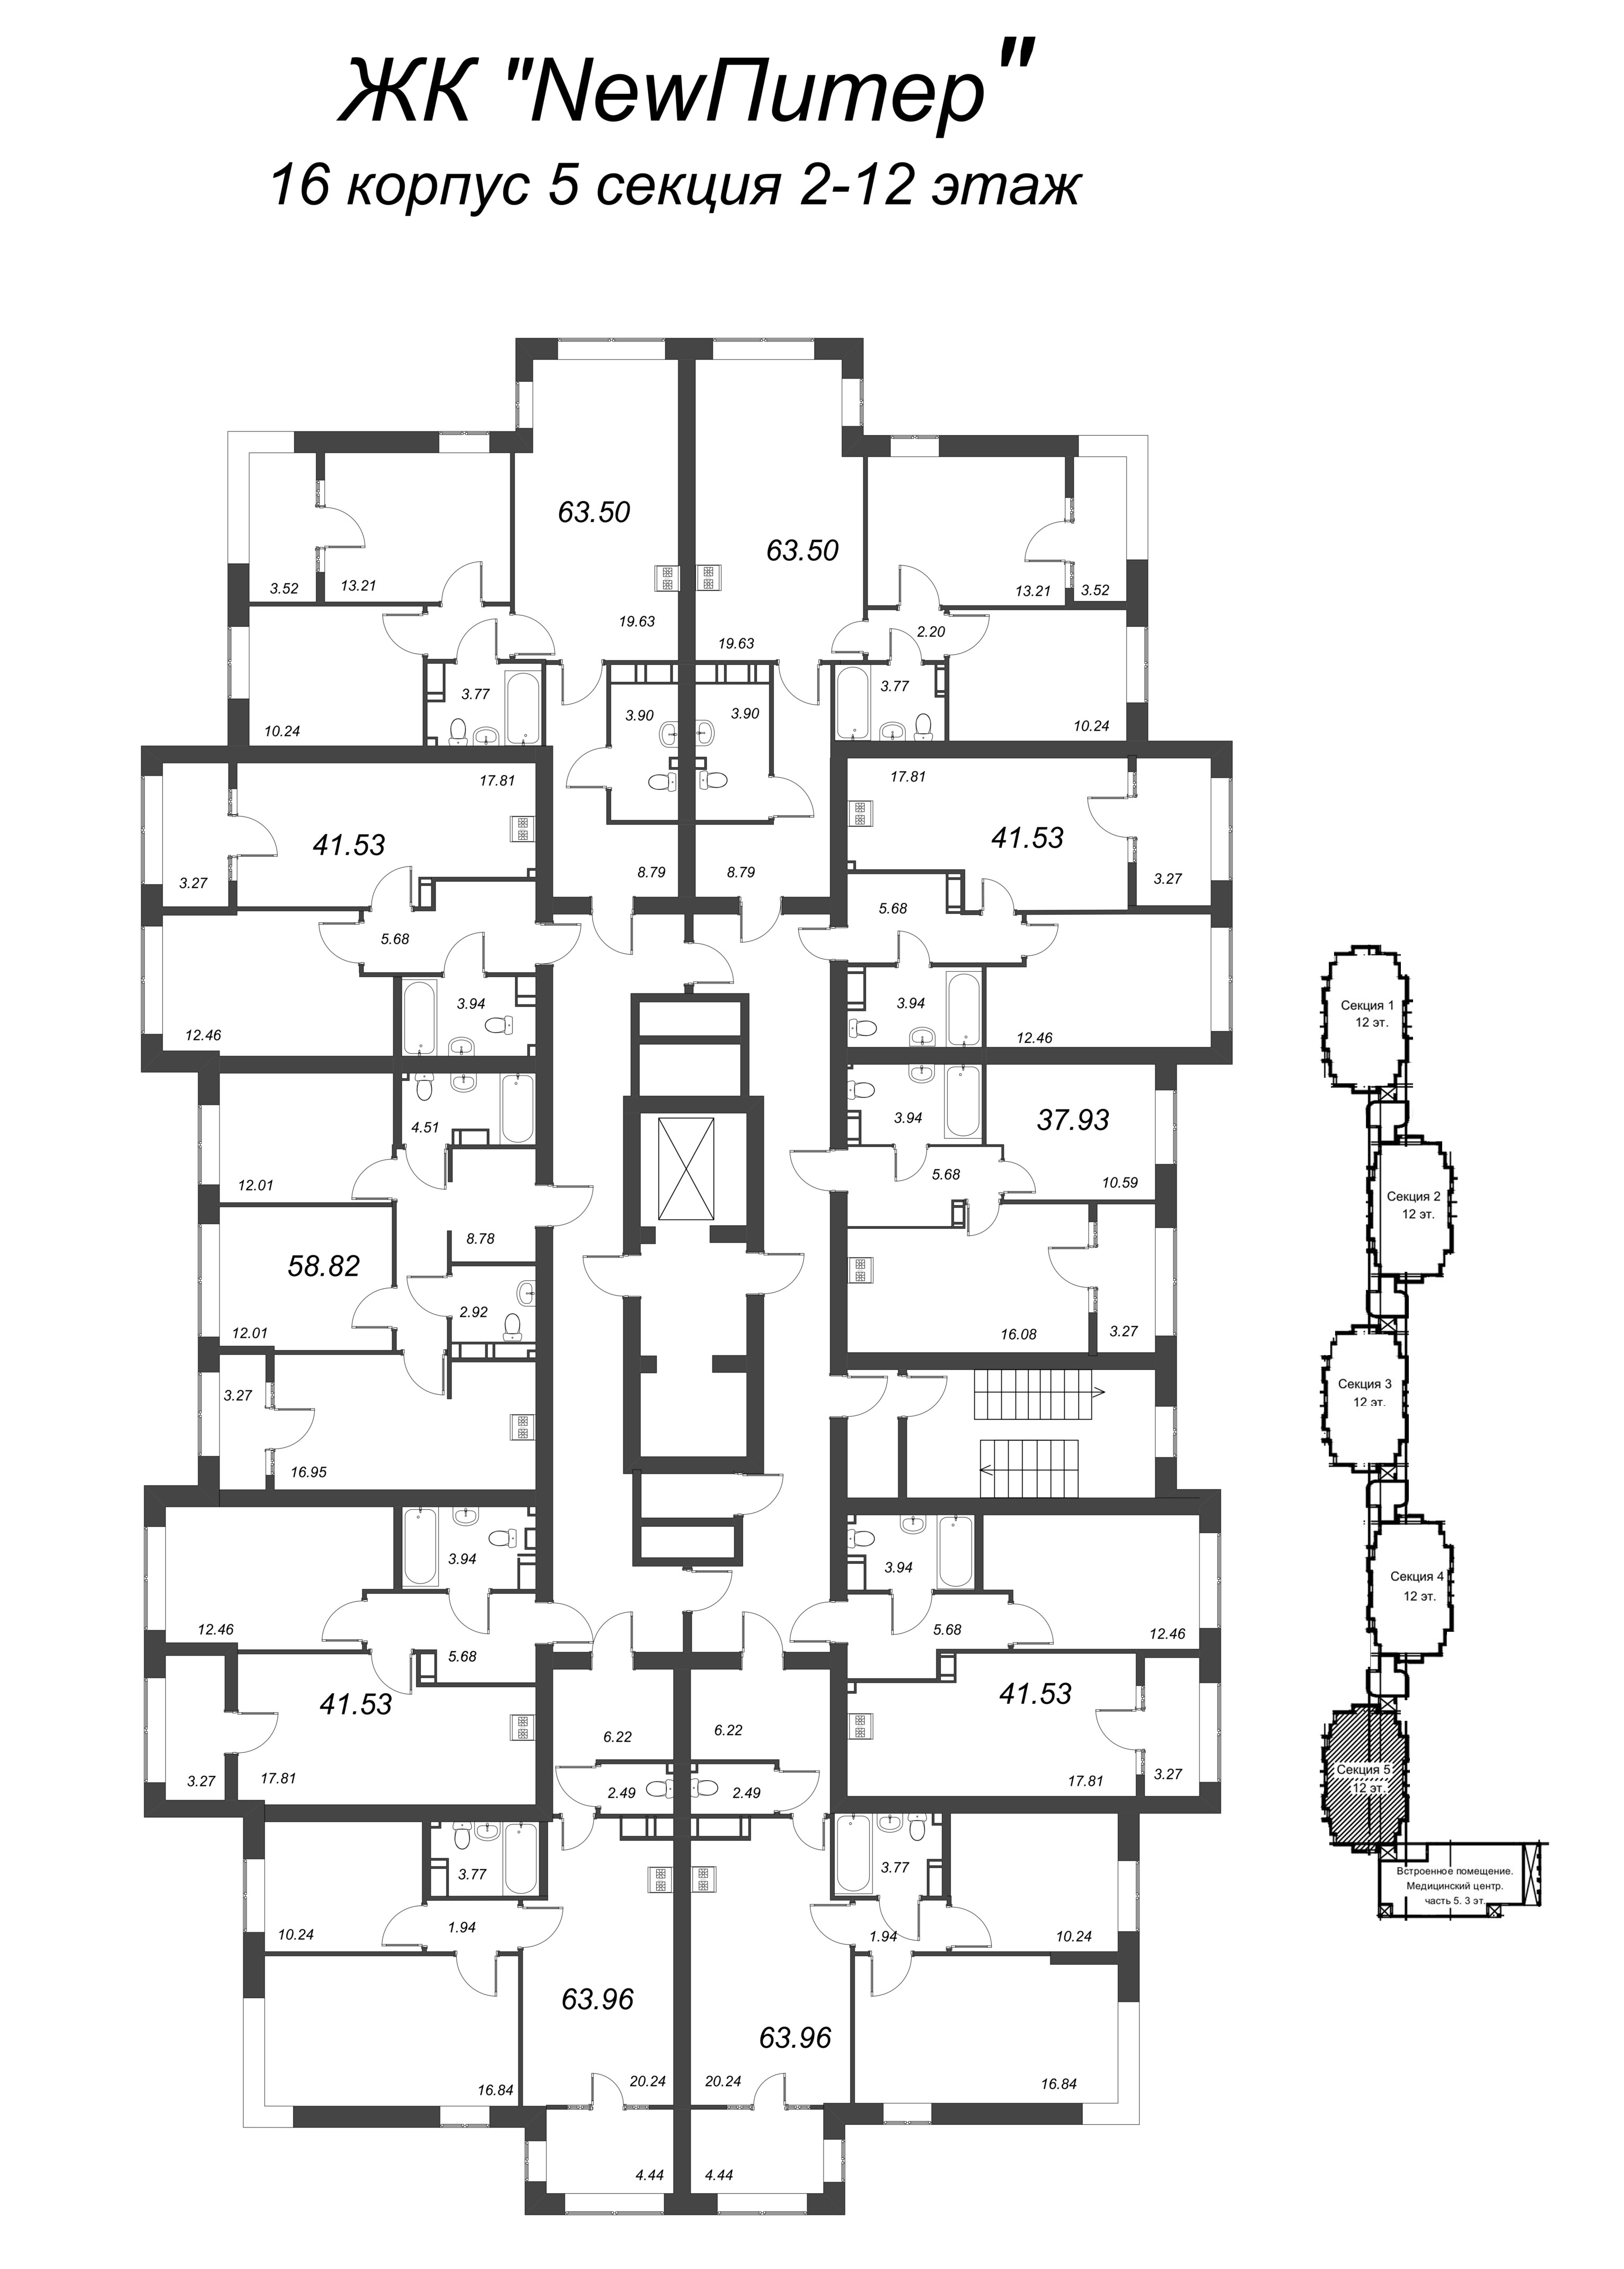 3-комнатная (Евро) квартира, 64.5 м² - планировка этажа